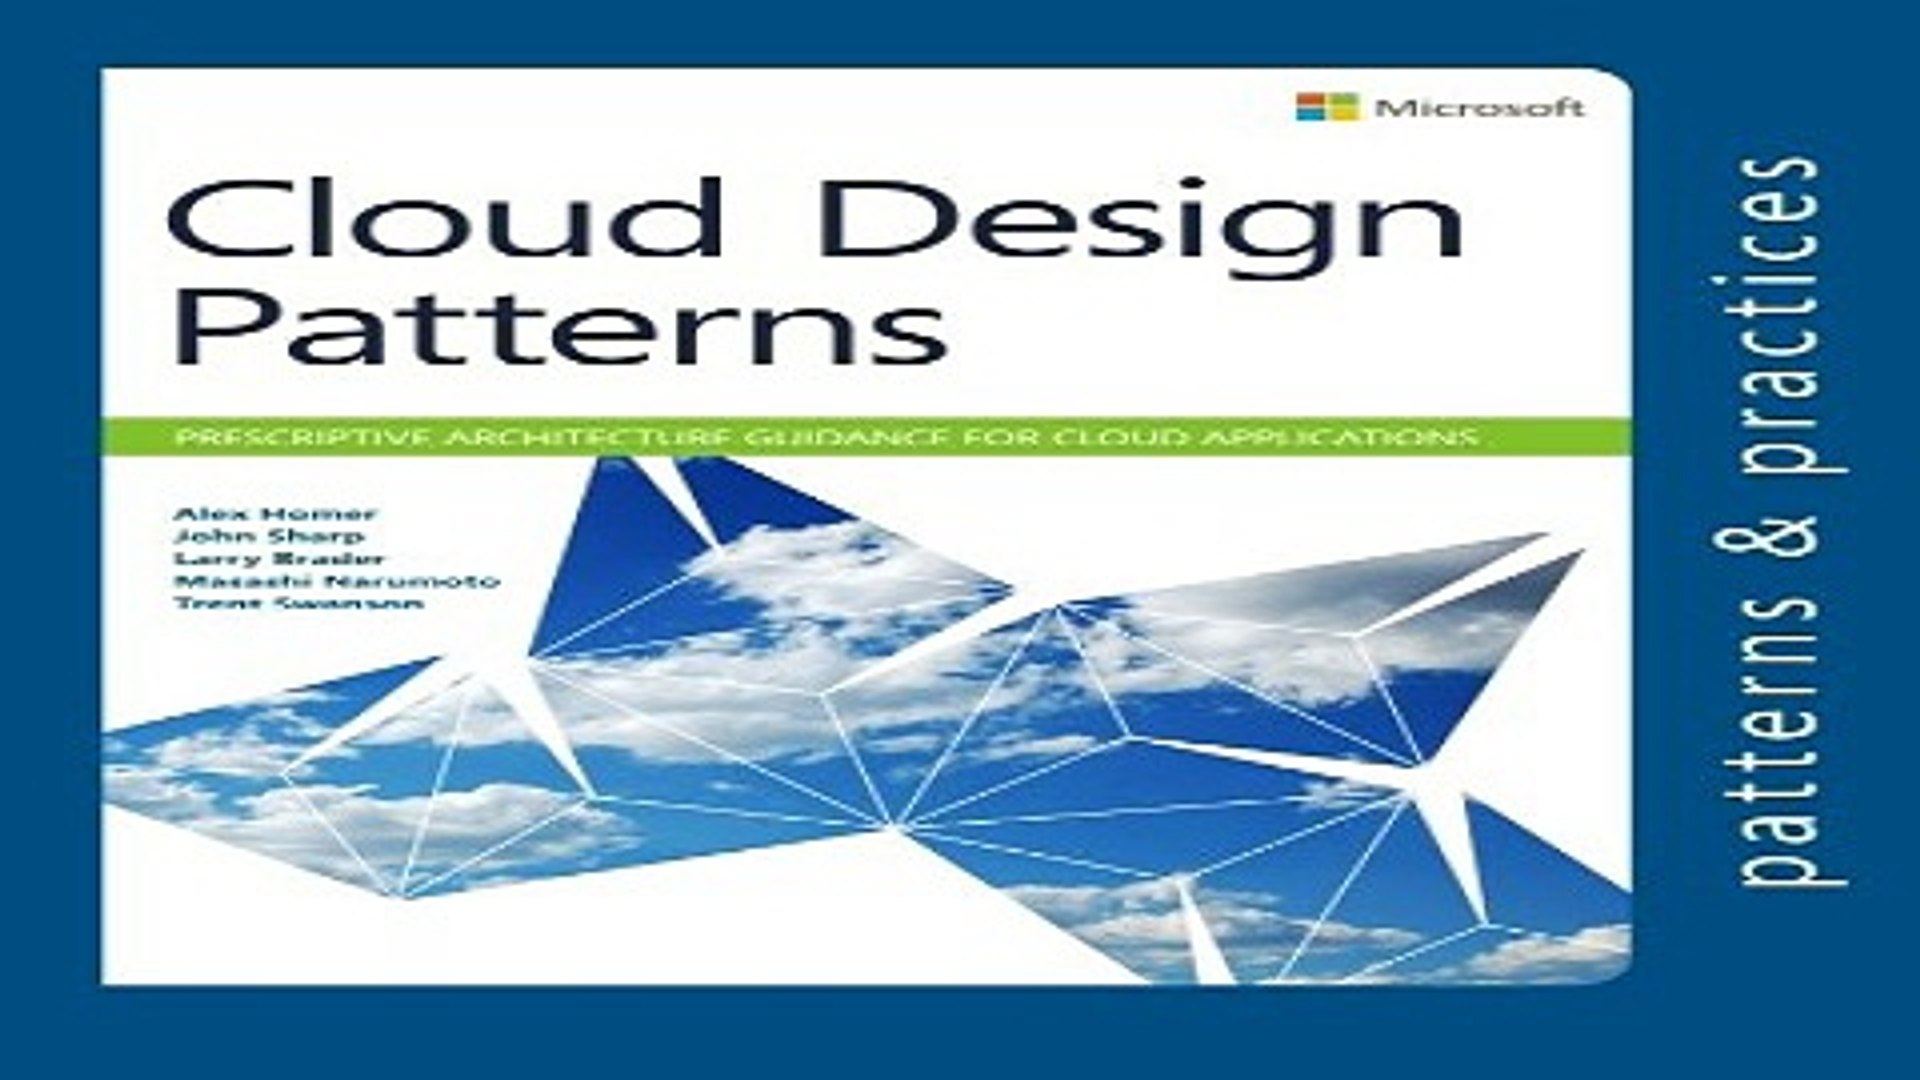 Read Cloud Design Patterns  Prescriptive Architecture Guidance for Cloud Applications  Microsoft